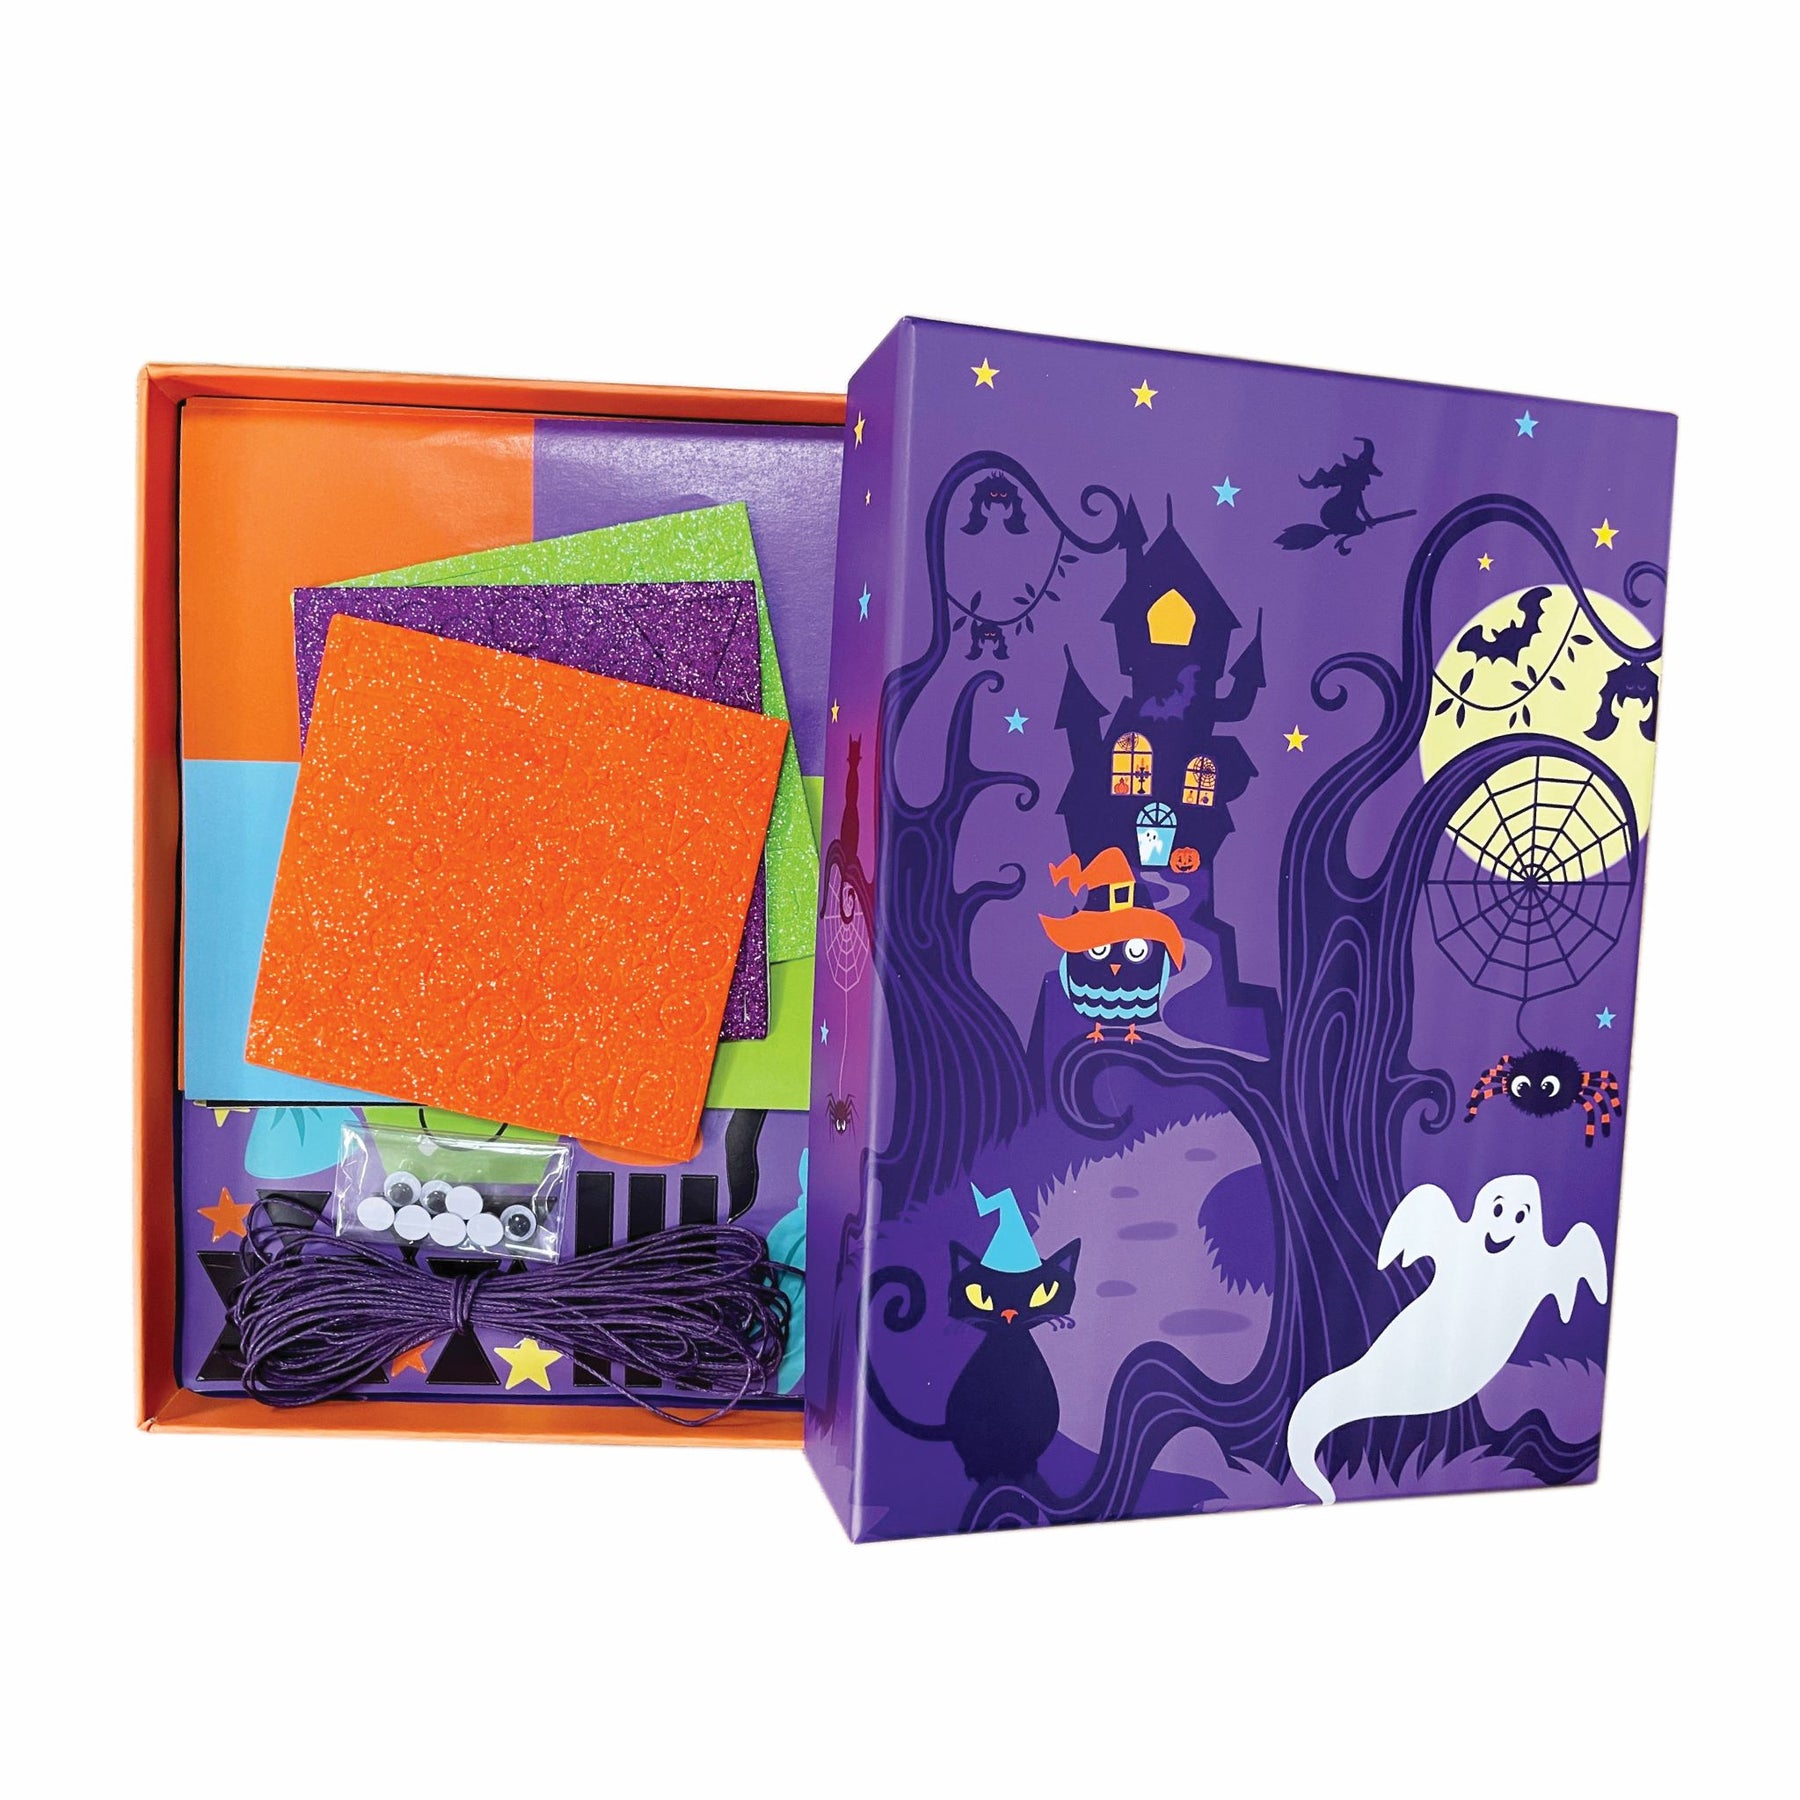 Totally Spooky Halloween Diamond Art Set – BOX CANDIY